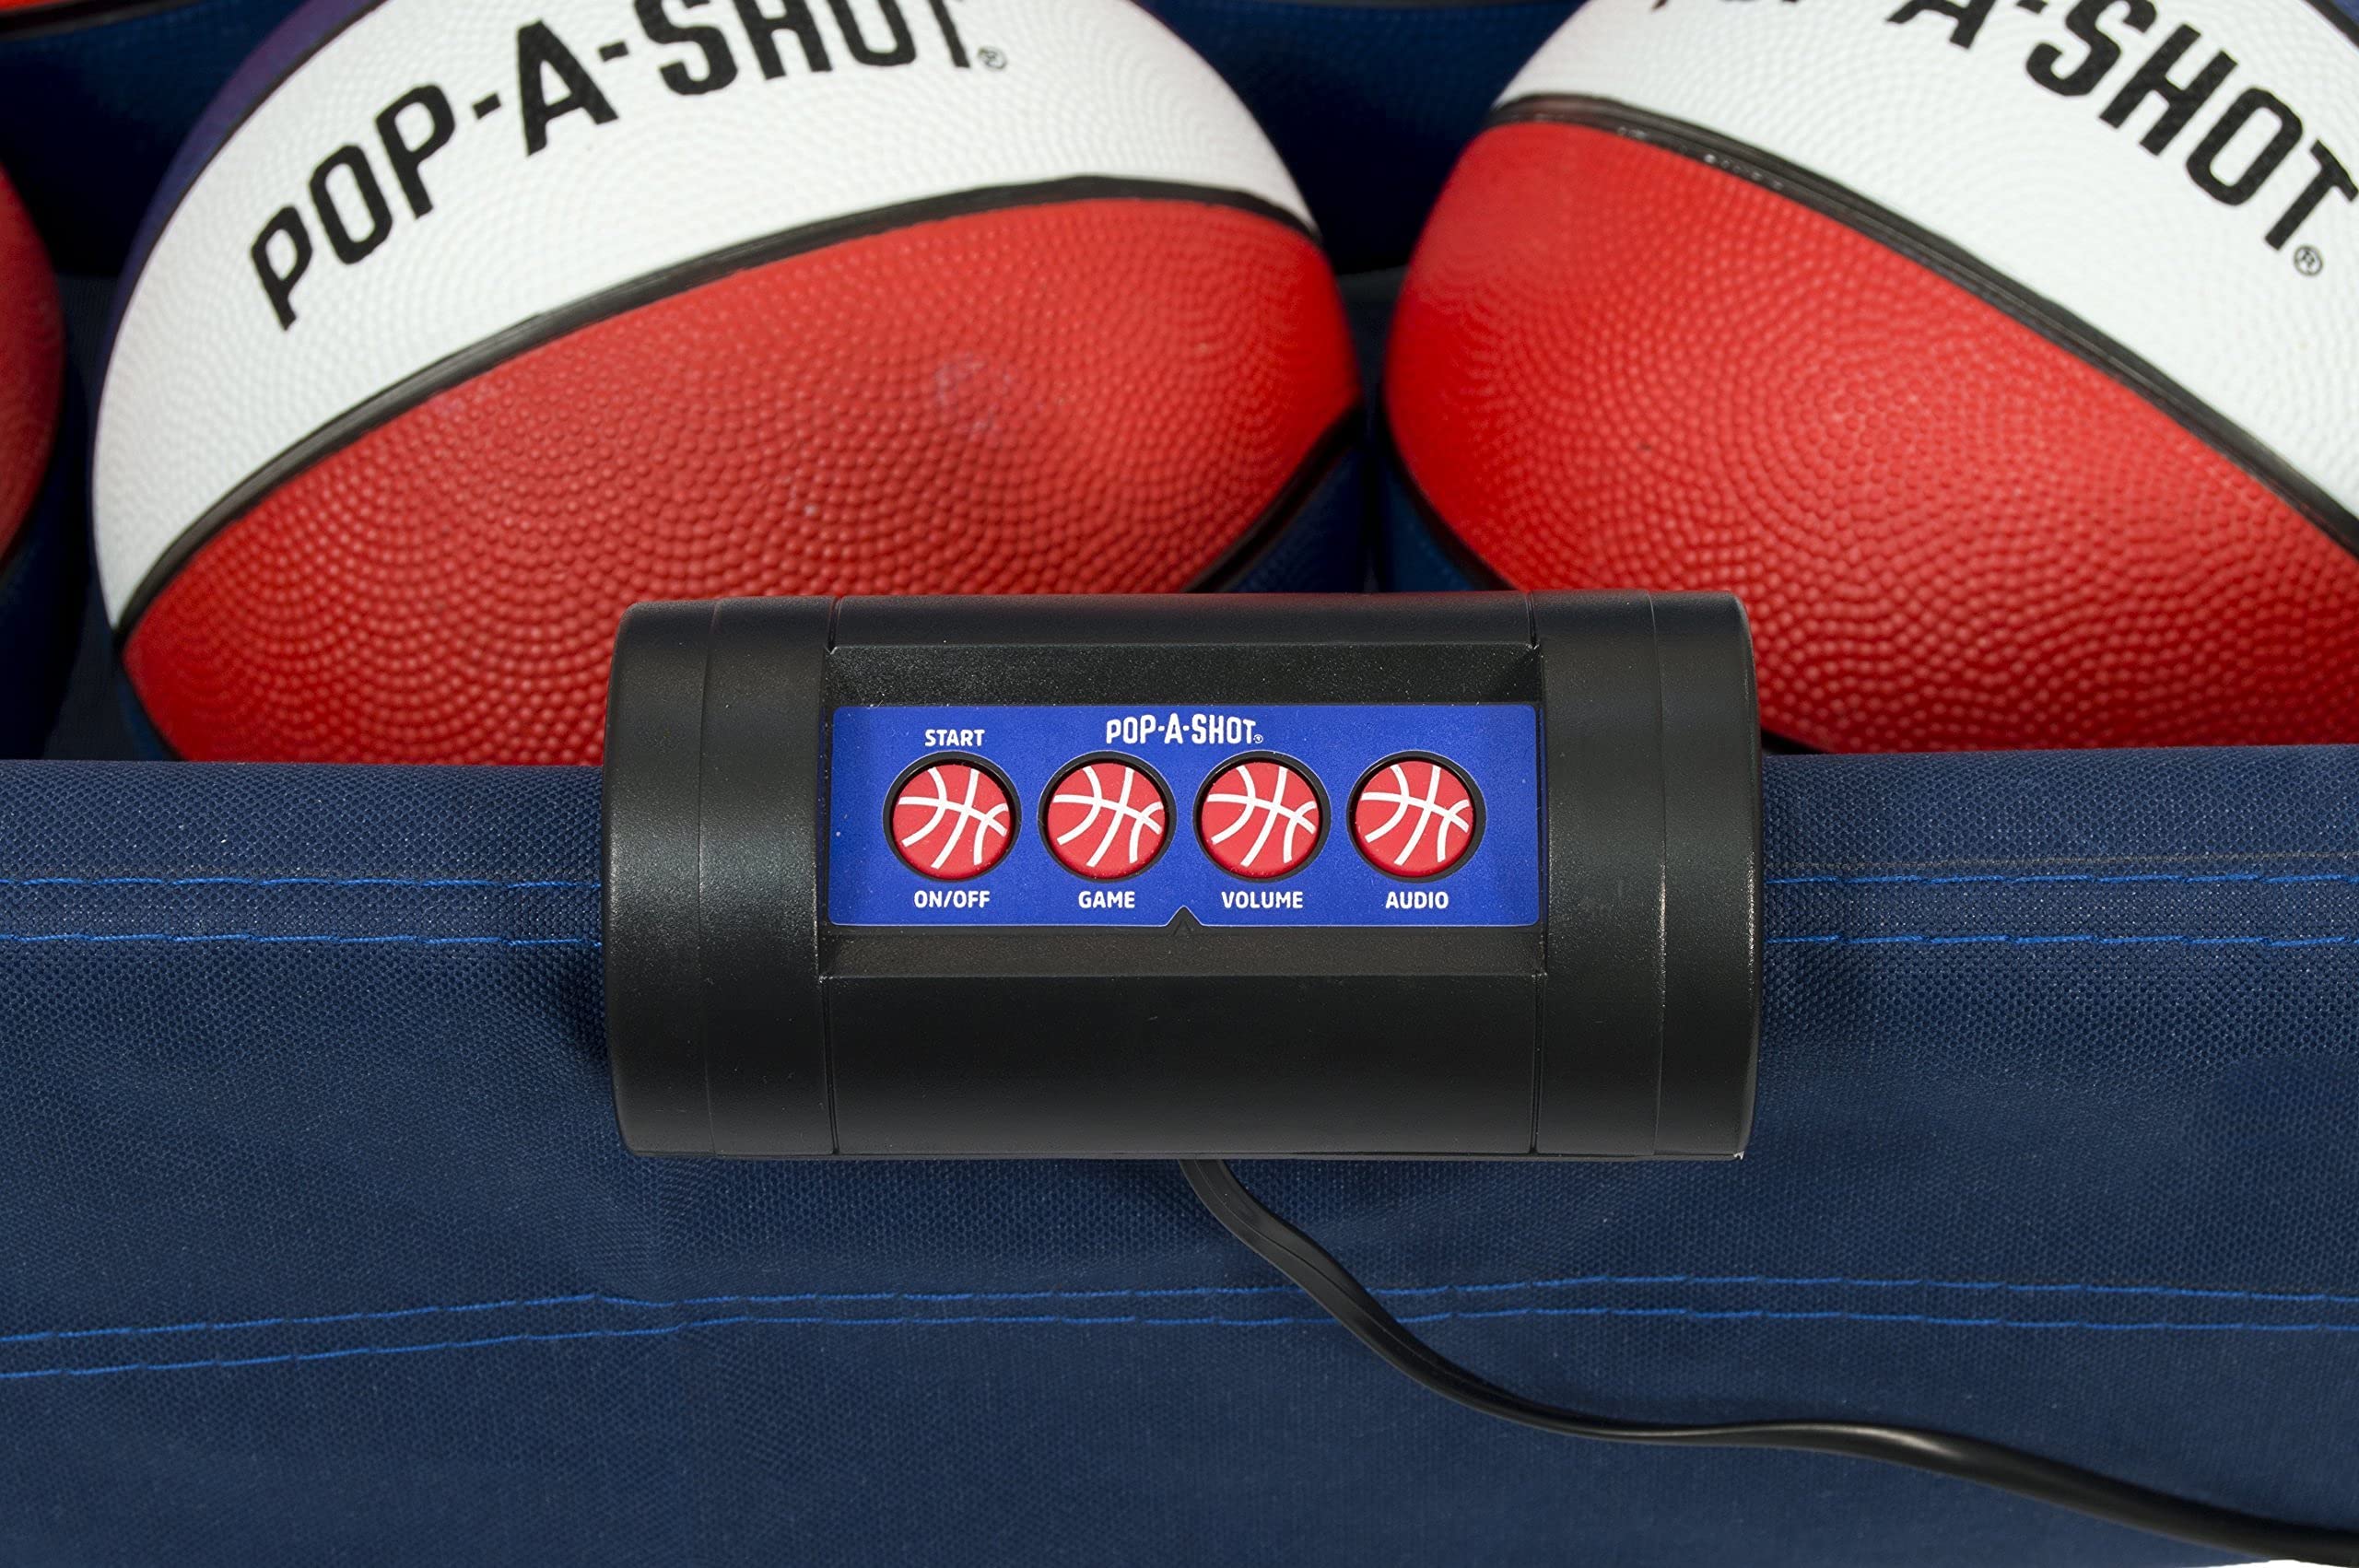 Pop-A-Shot - Home Dual Shot | Arcade Basketball Fun at Home l Infrared Sensor Scoring | 16 Game Modes | 7 Balls l Foldable Storage | for Kids Ages 6-106